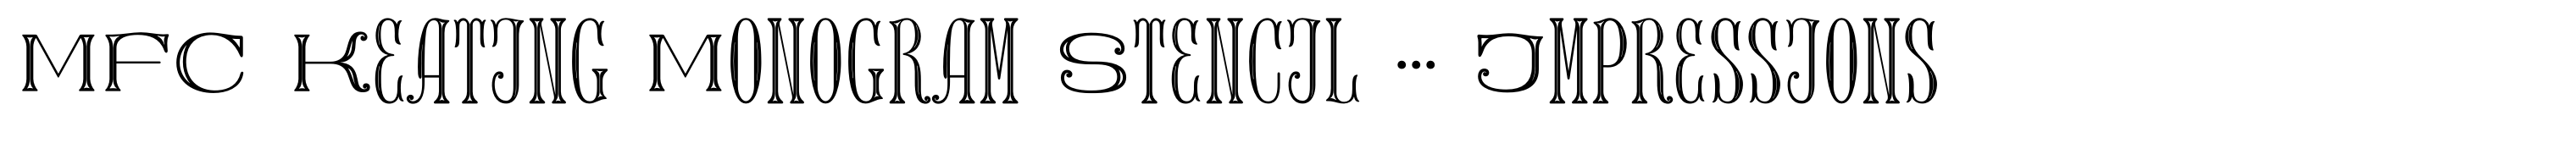 MFC Keating Monogram Stencil 250 Impressions